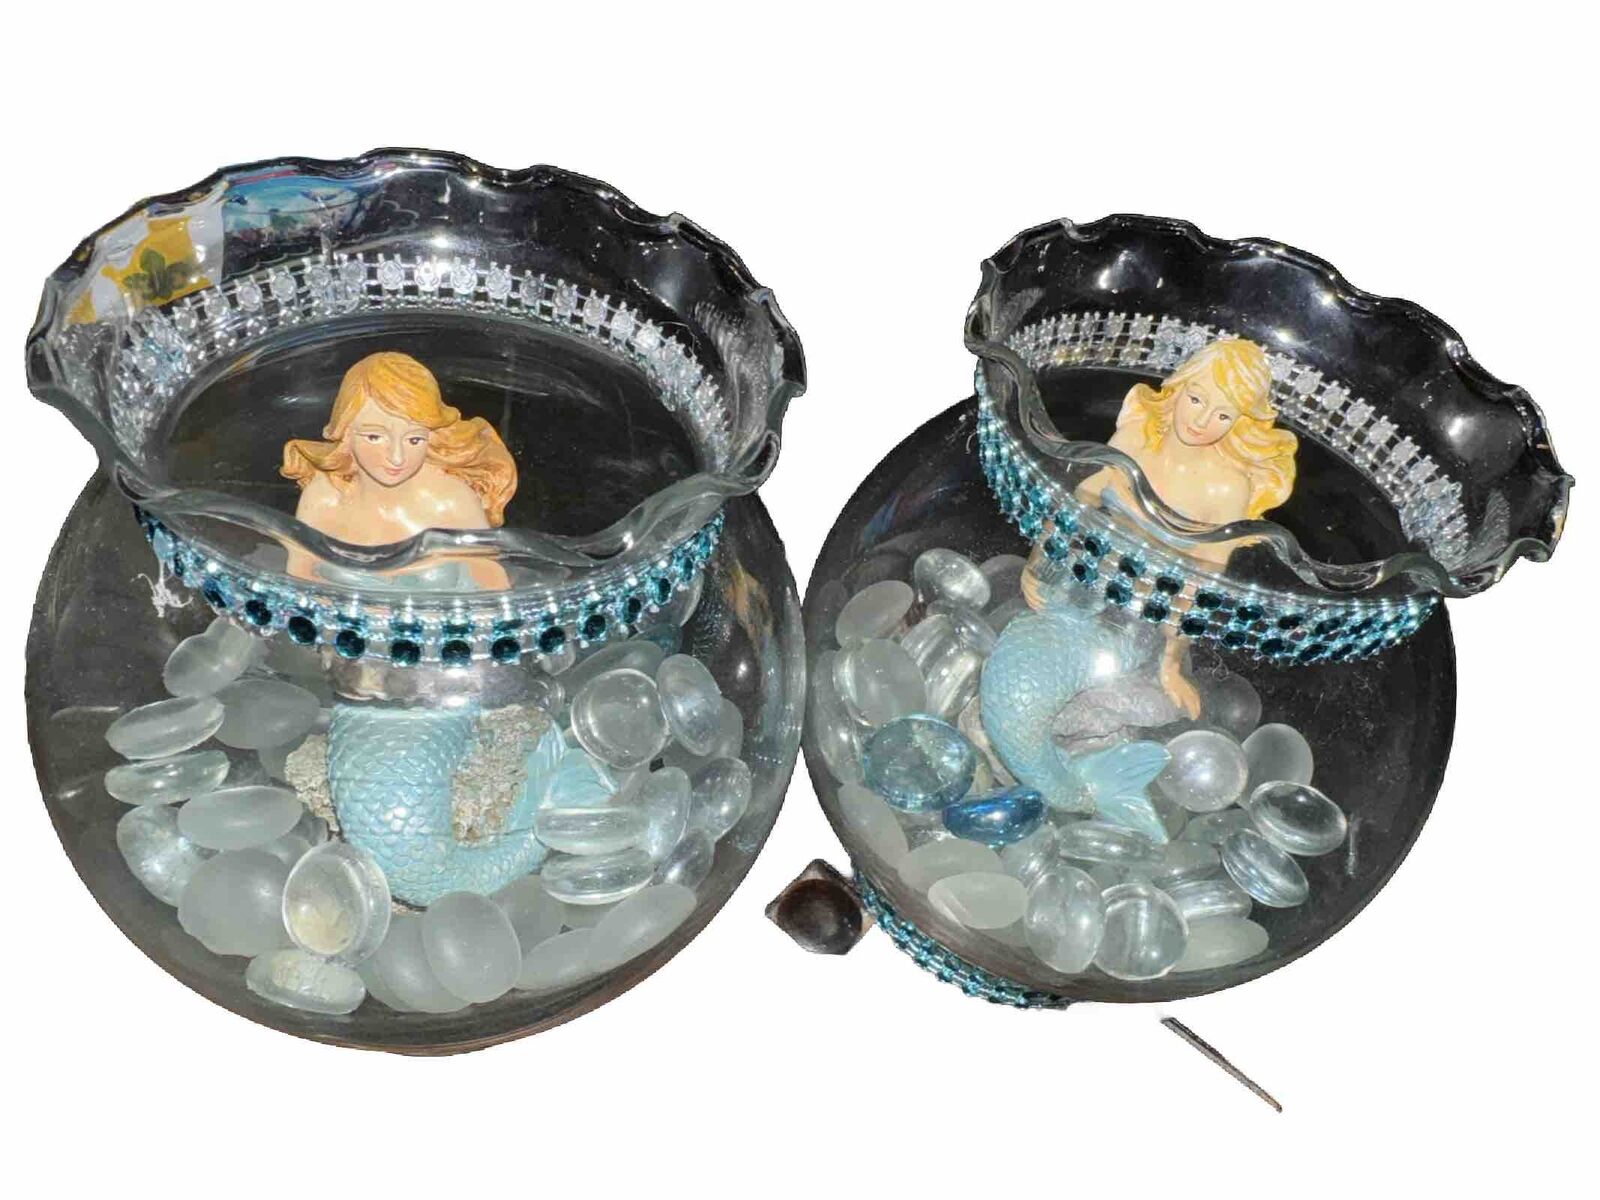 Decorative Glass Ocean Scenery Resin Mermaid Displays